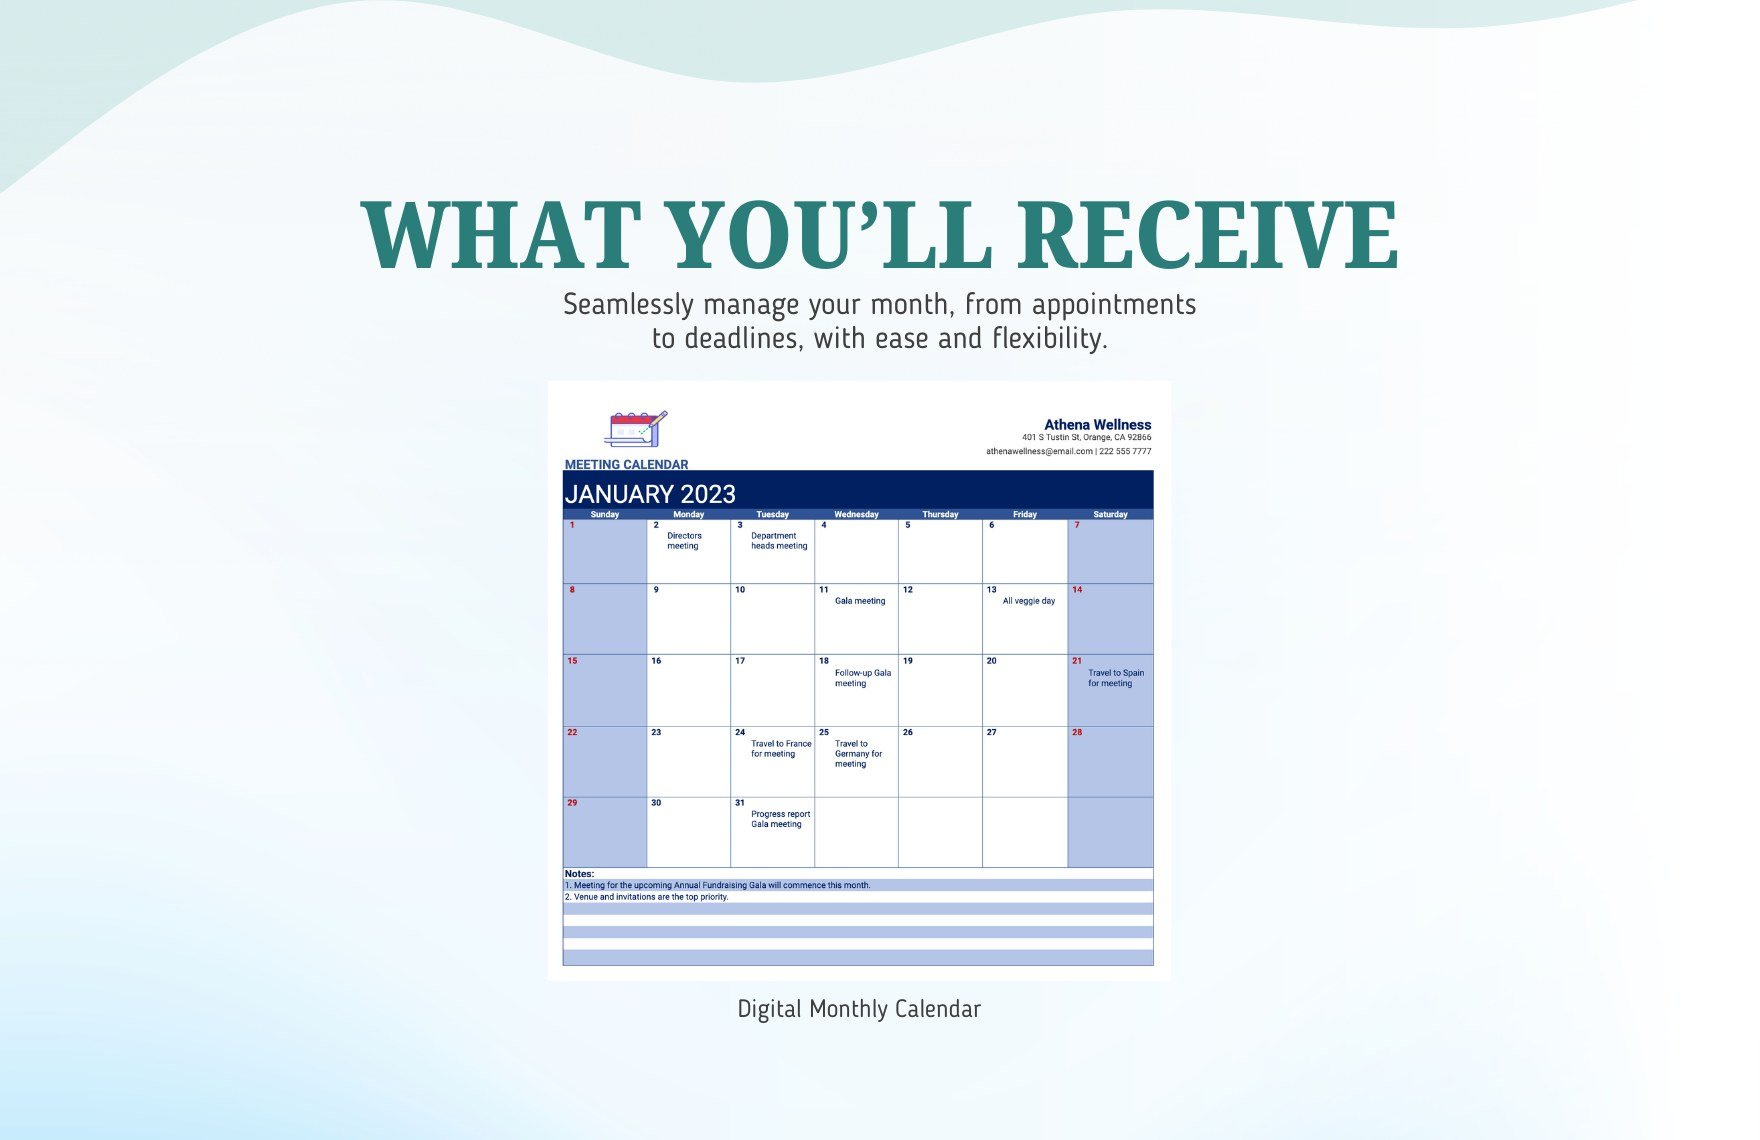 Digital Monthly Calendar Template